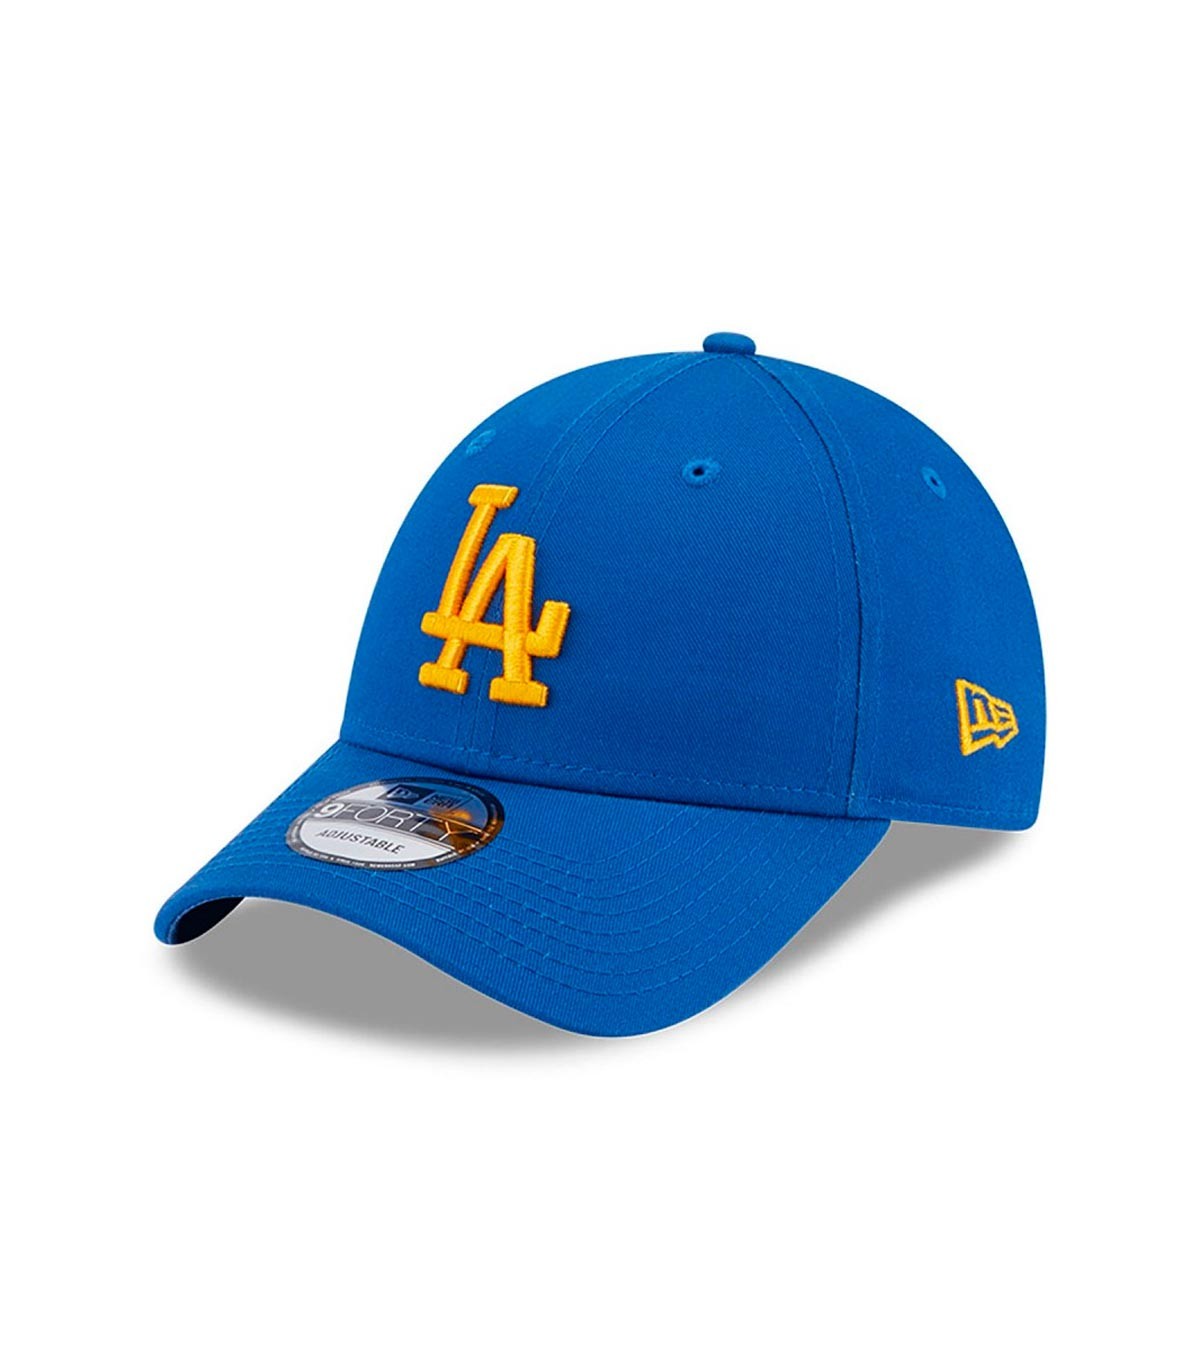 New Era - Gorra L.A. Dodgers - Azul